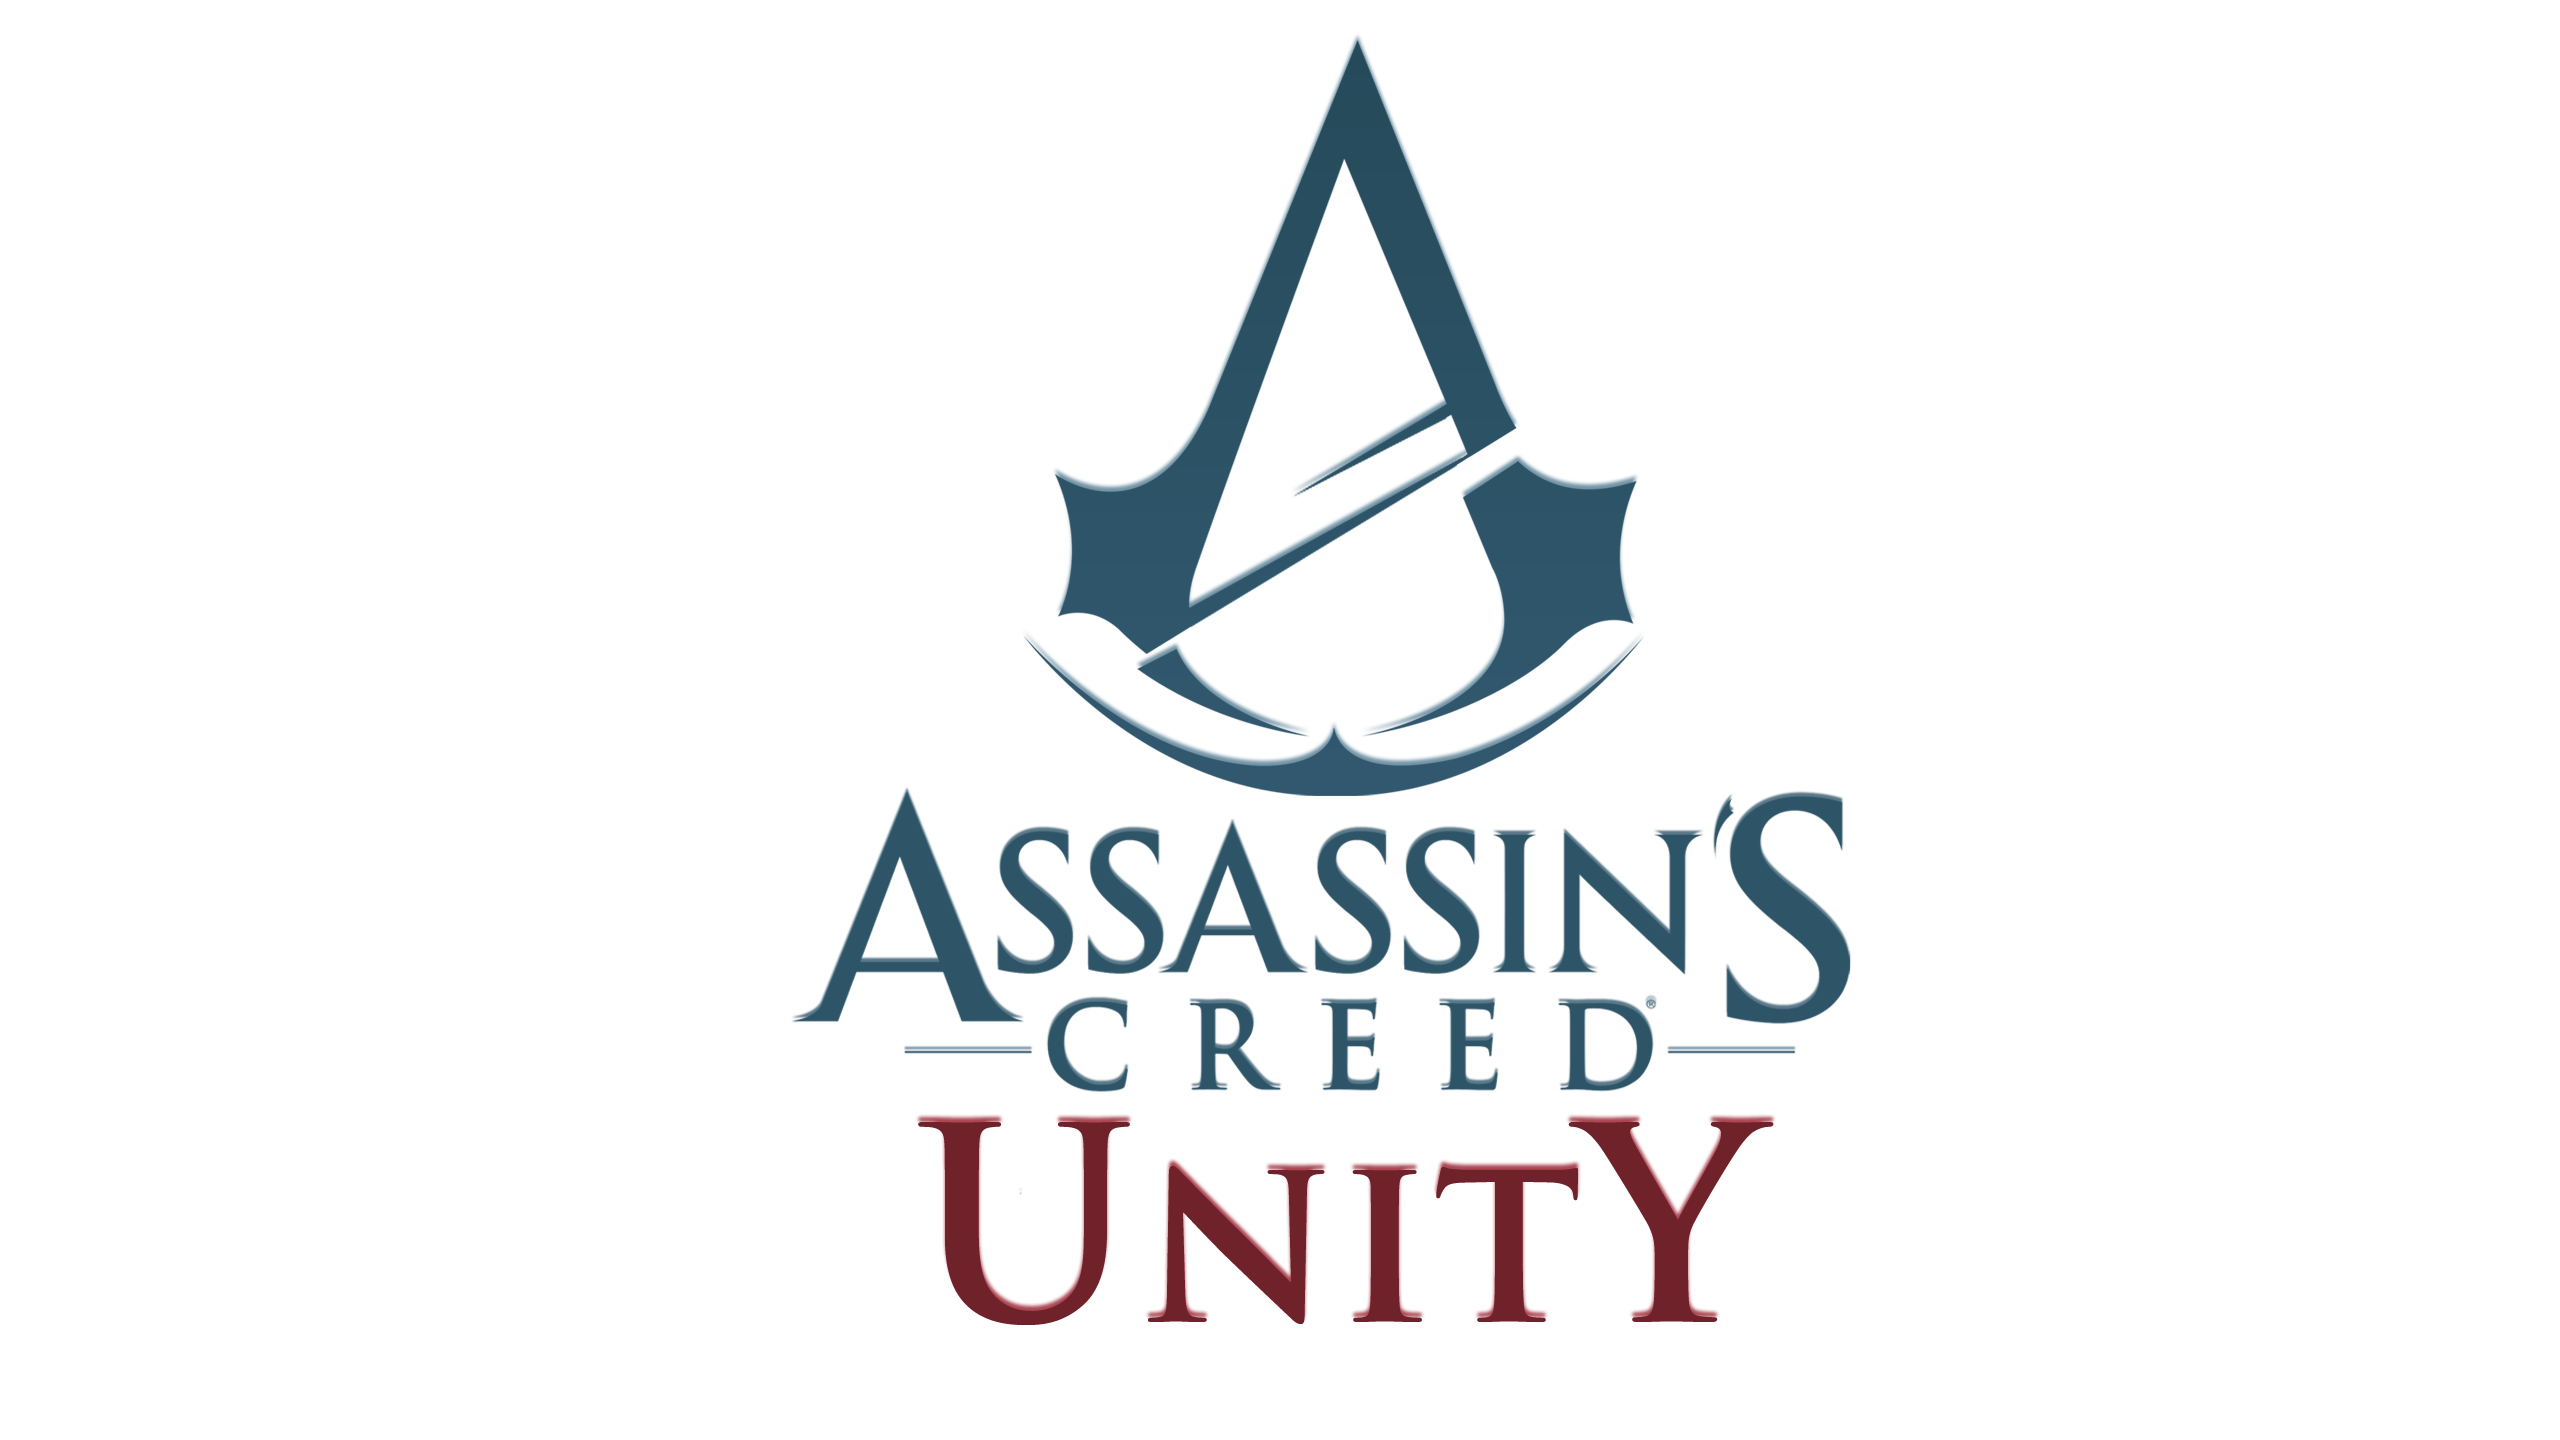 Assassins creed unity logo